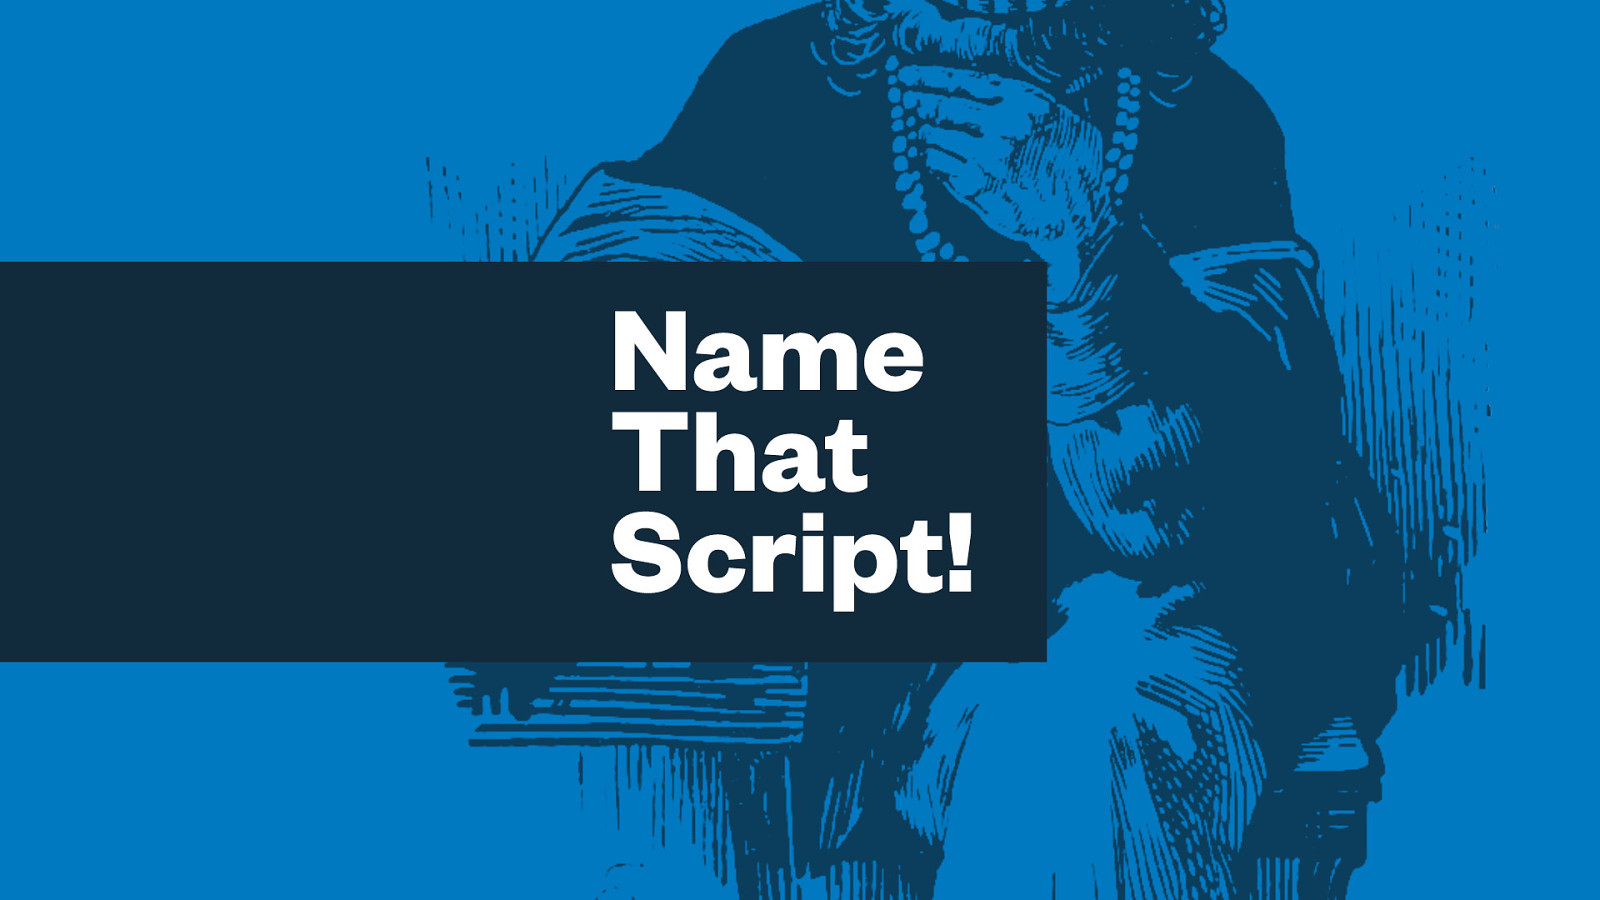 Name That Script!